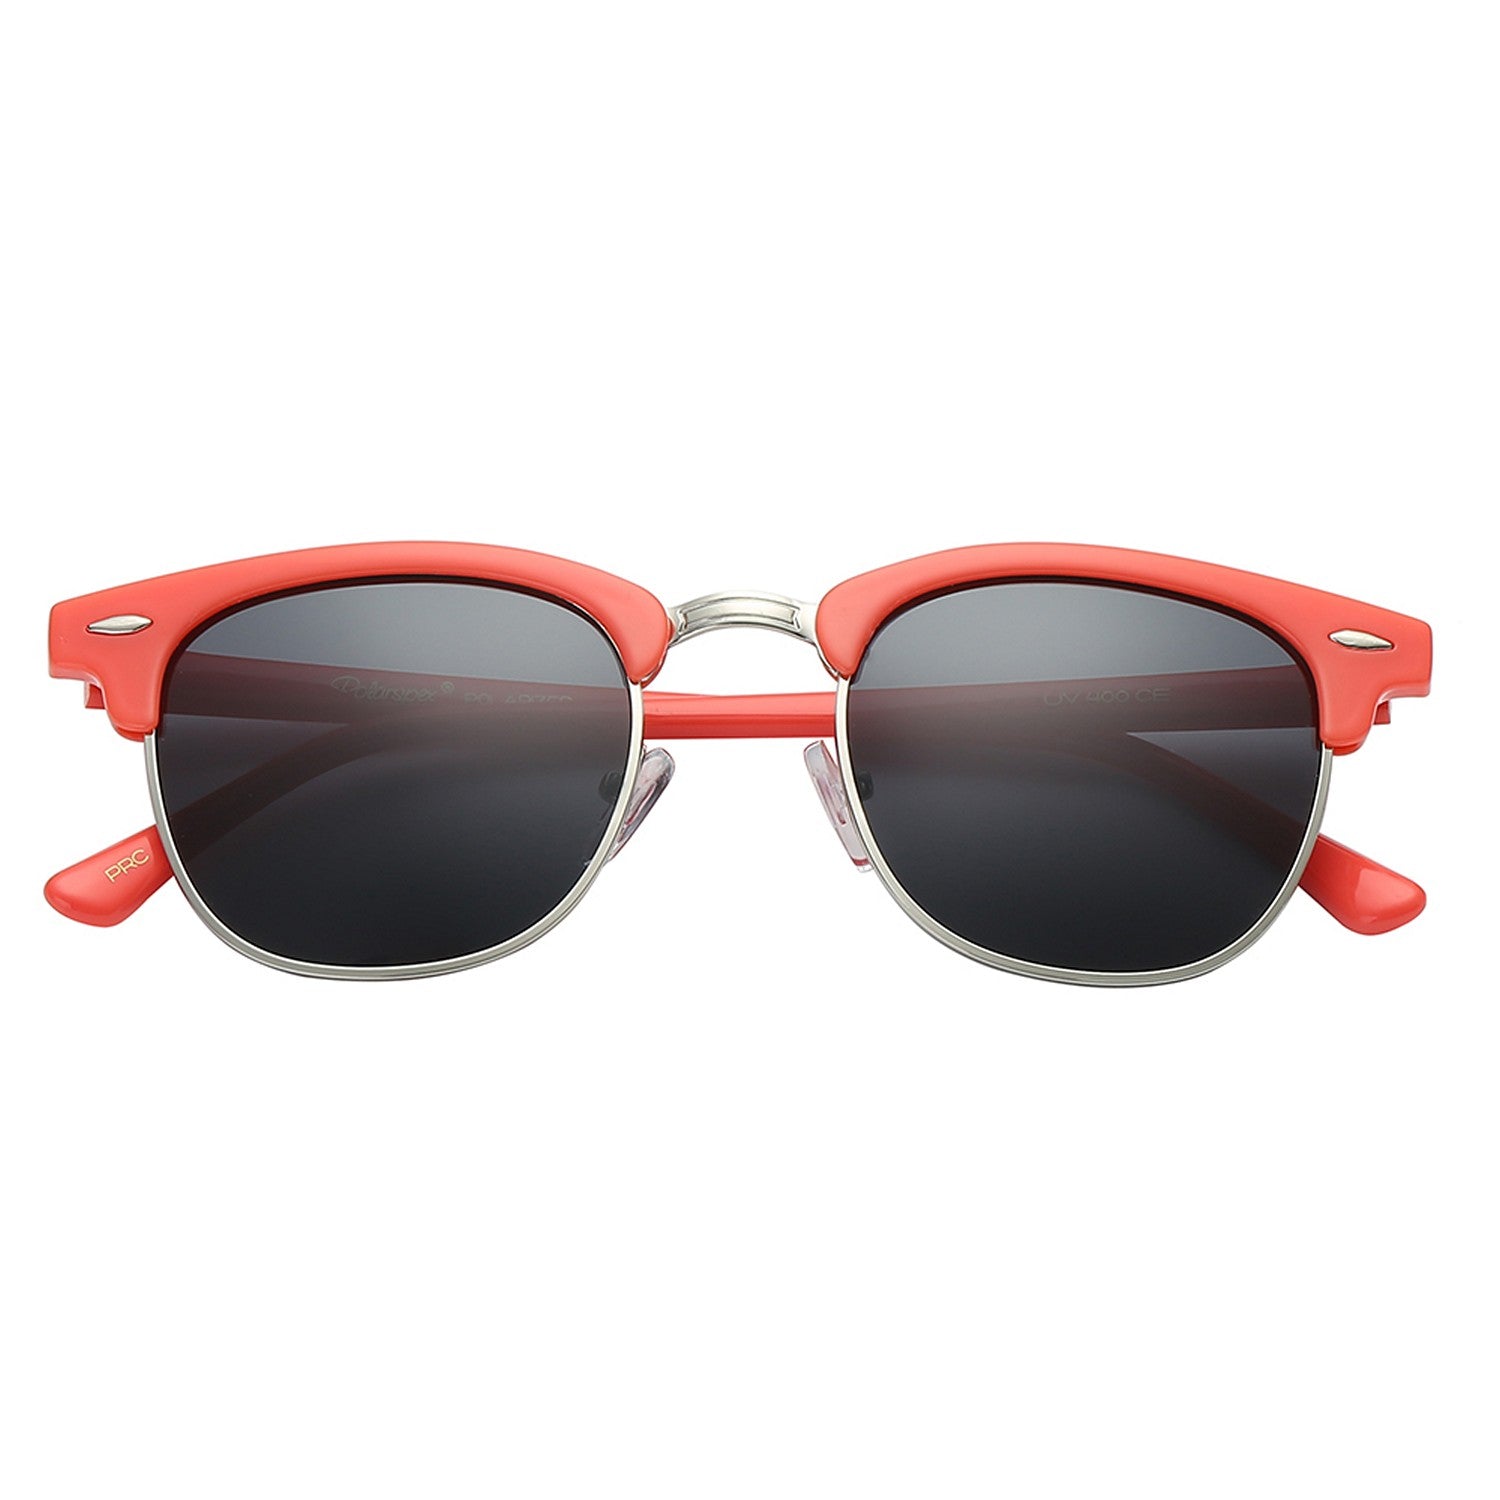 Polarspex Polarized Malcom Half Frame Semi-Rimless Style Unisex Sunglasses with Ocean Coral Frames and Ash Brown Lenses